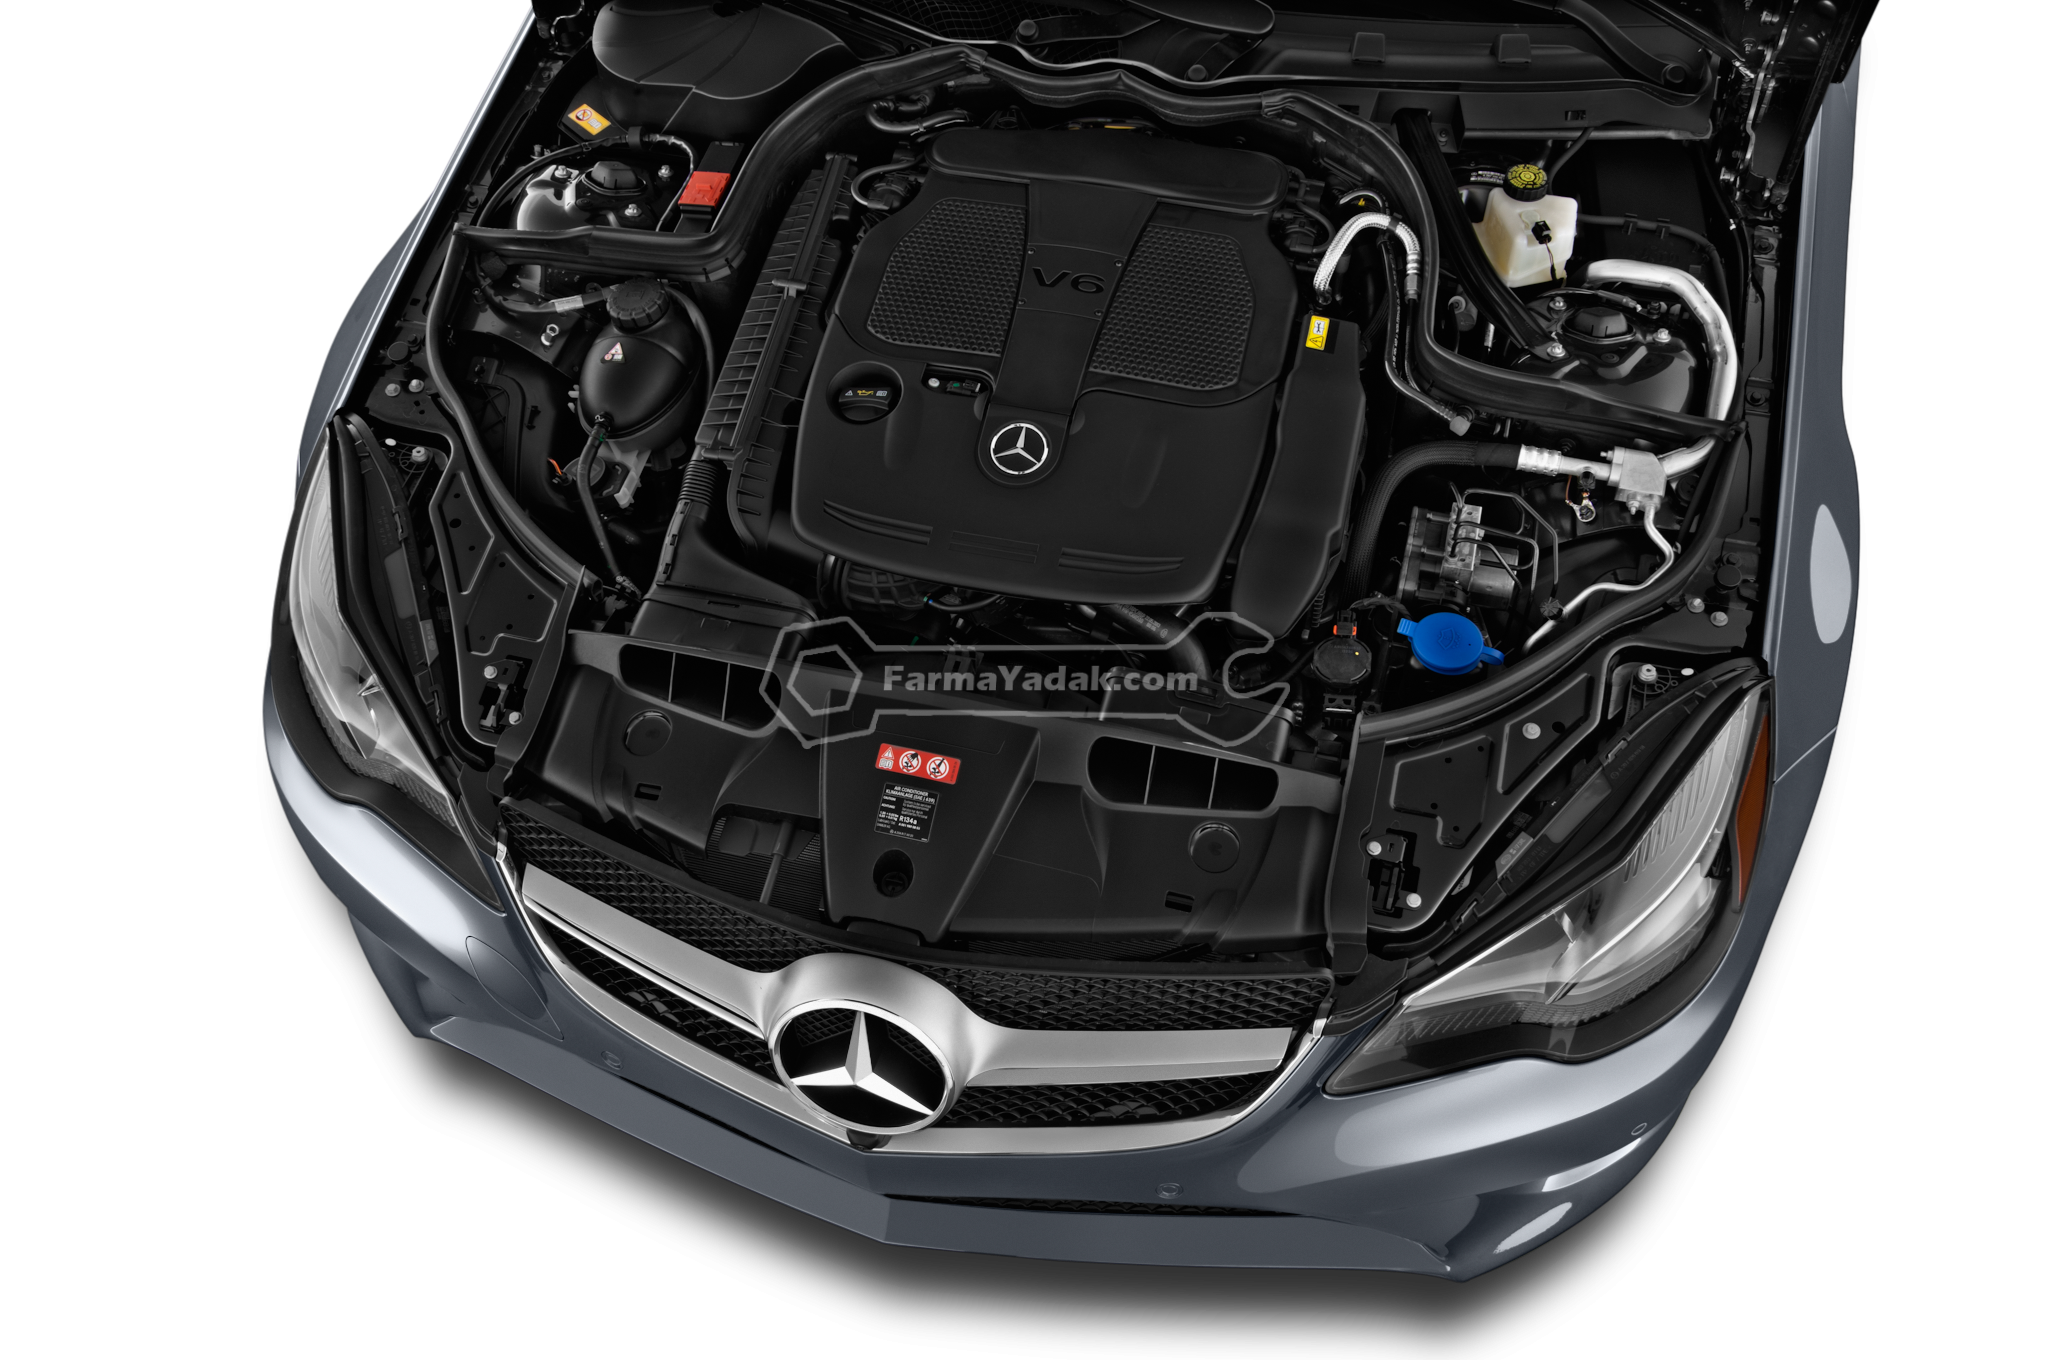 2017 mercedes benz e class 400 convertible engine لوازم یدکی اورجینال یا تحت لیسانس؟